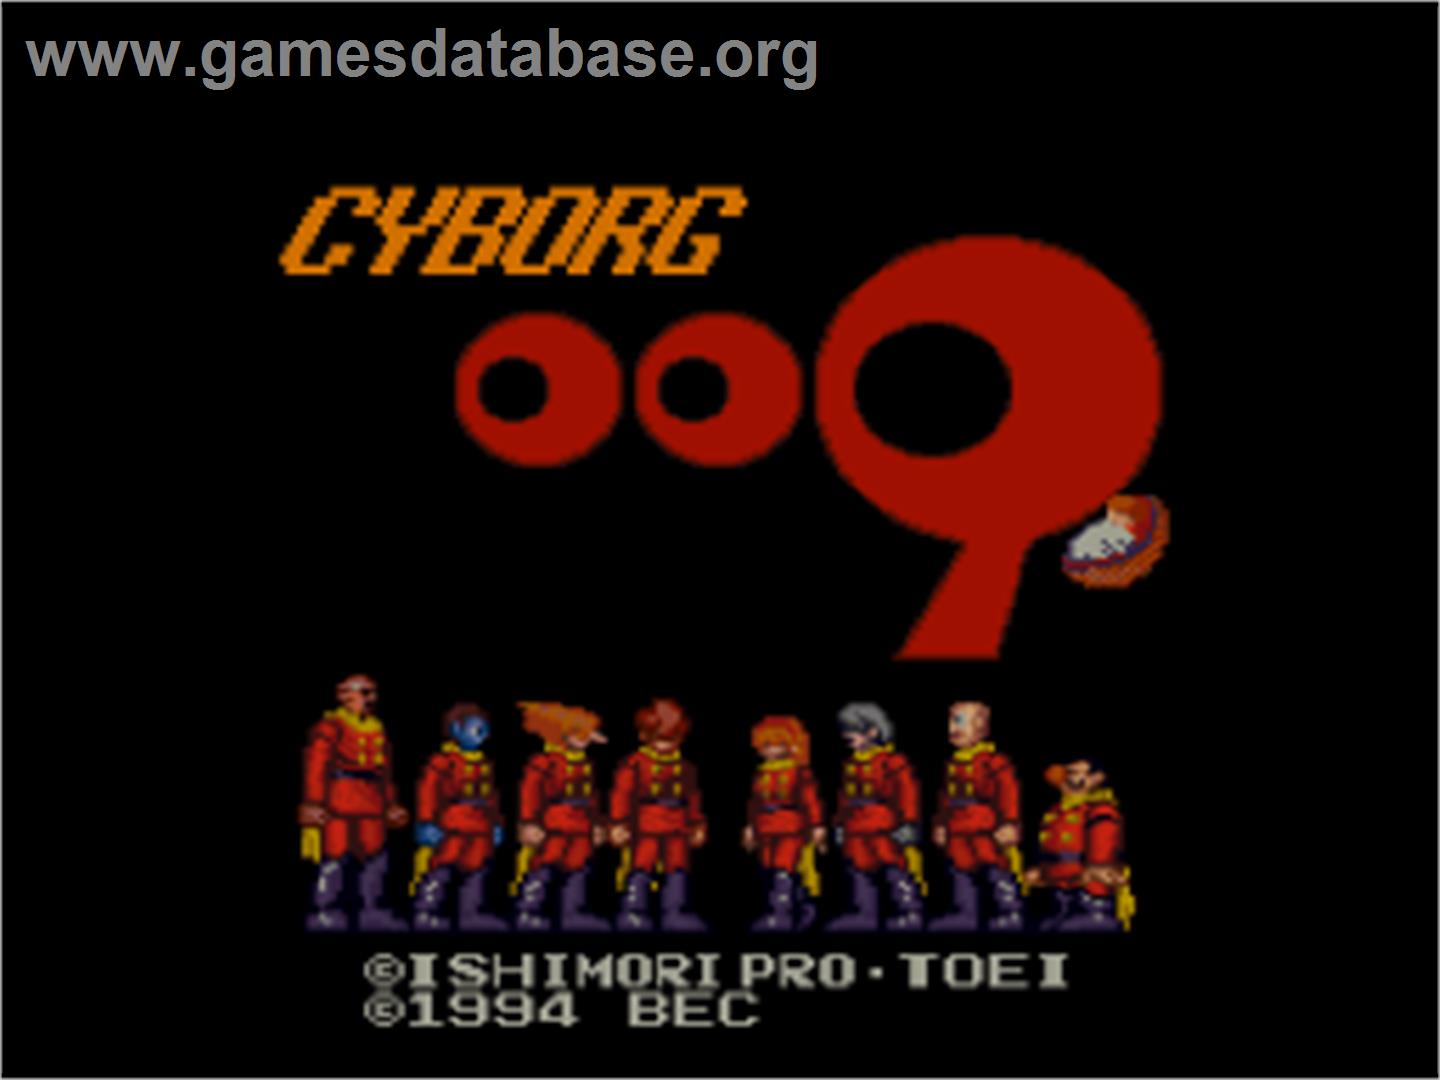 Cyborg 009 - Nintendo SNES - Artwork - Title Screen